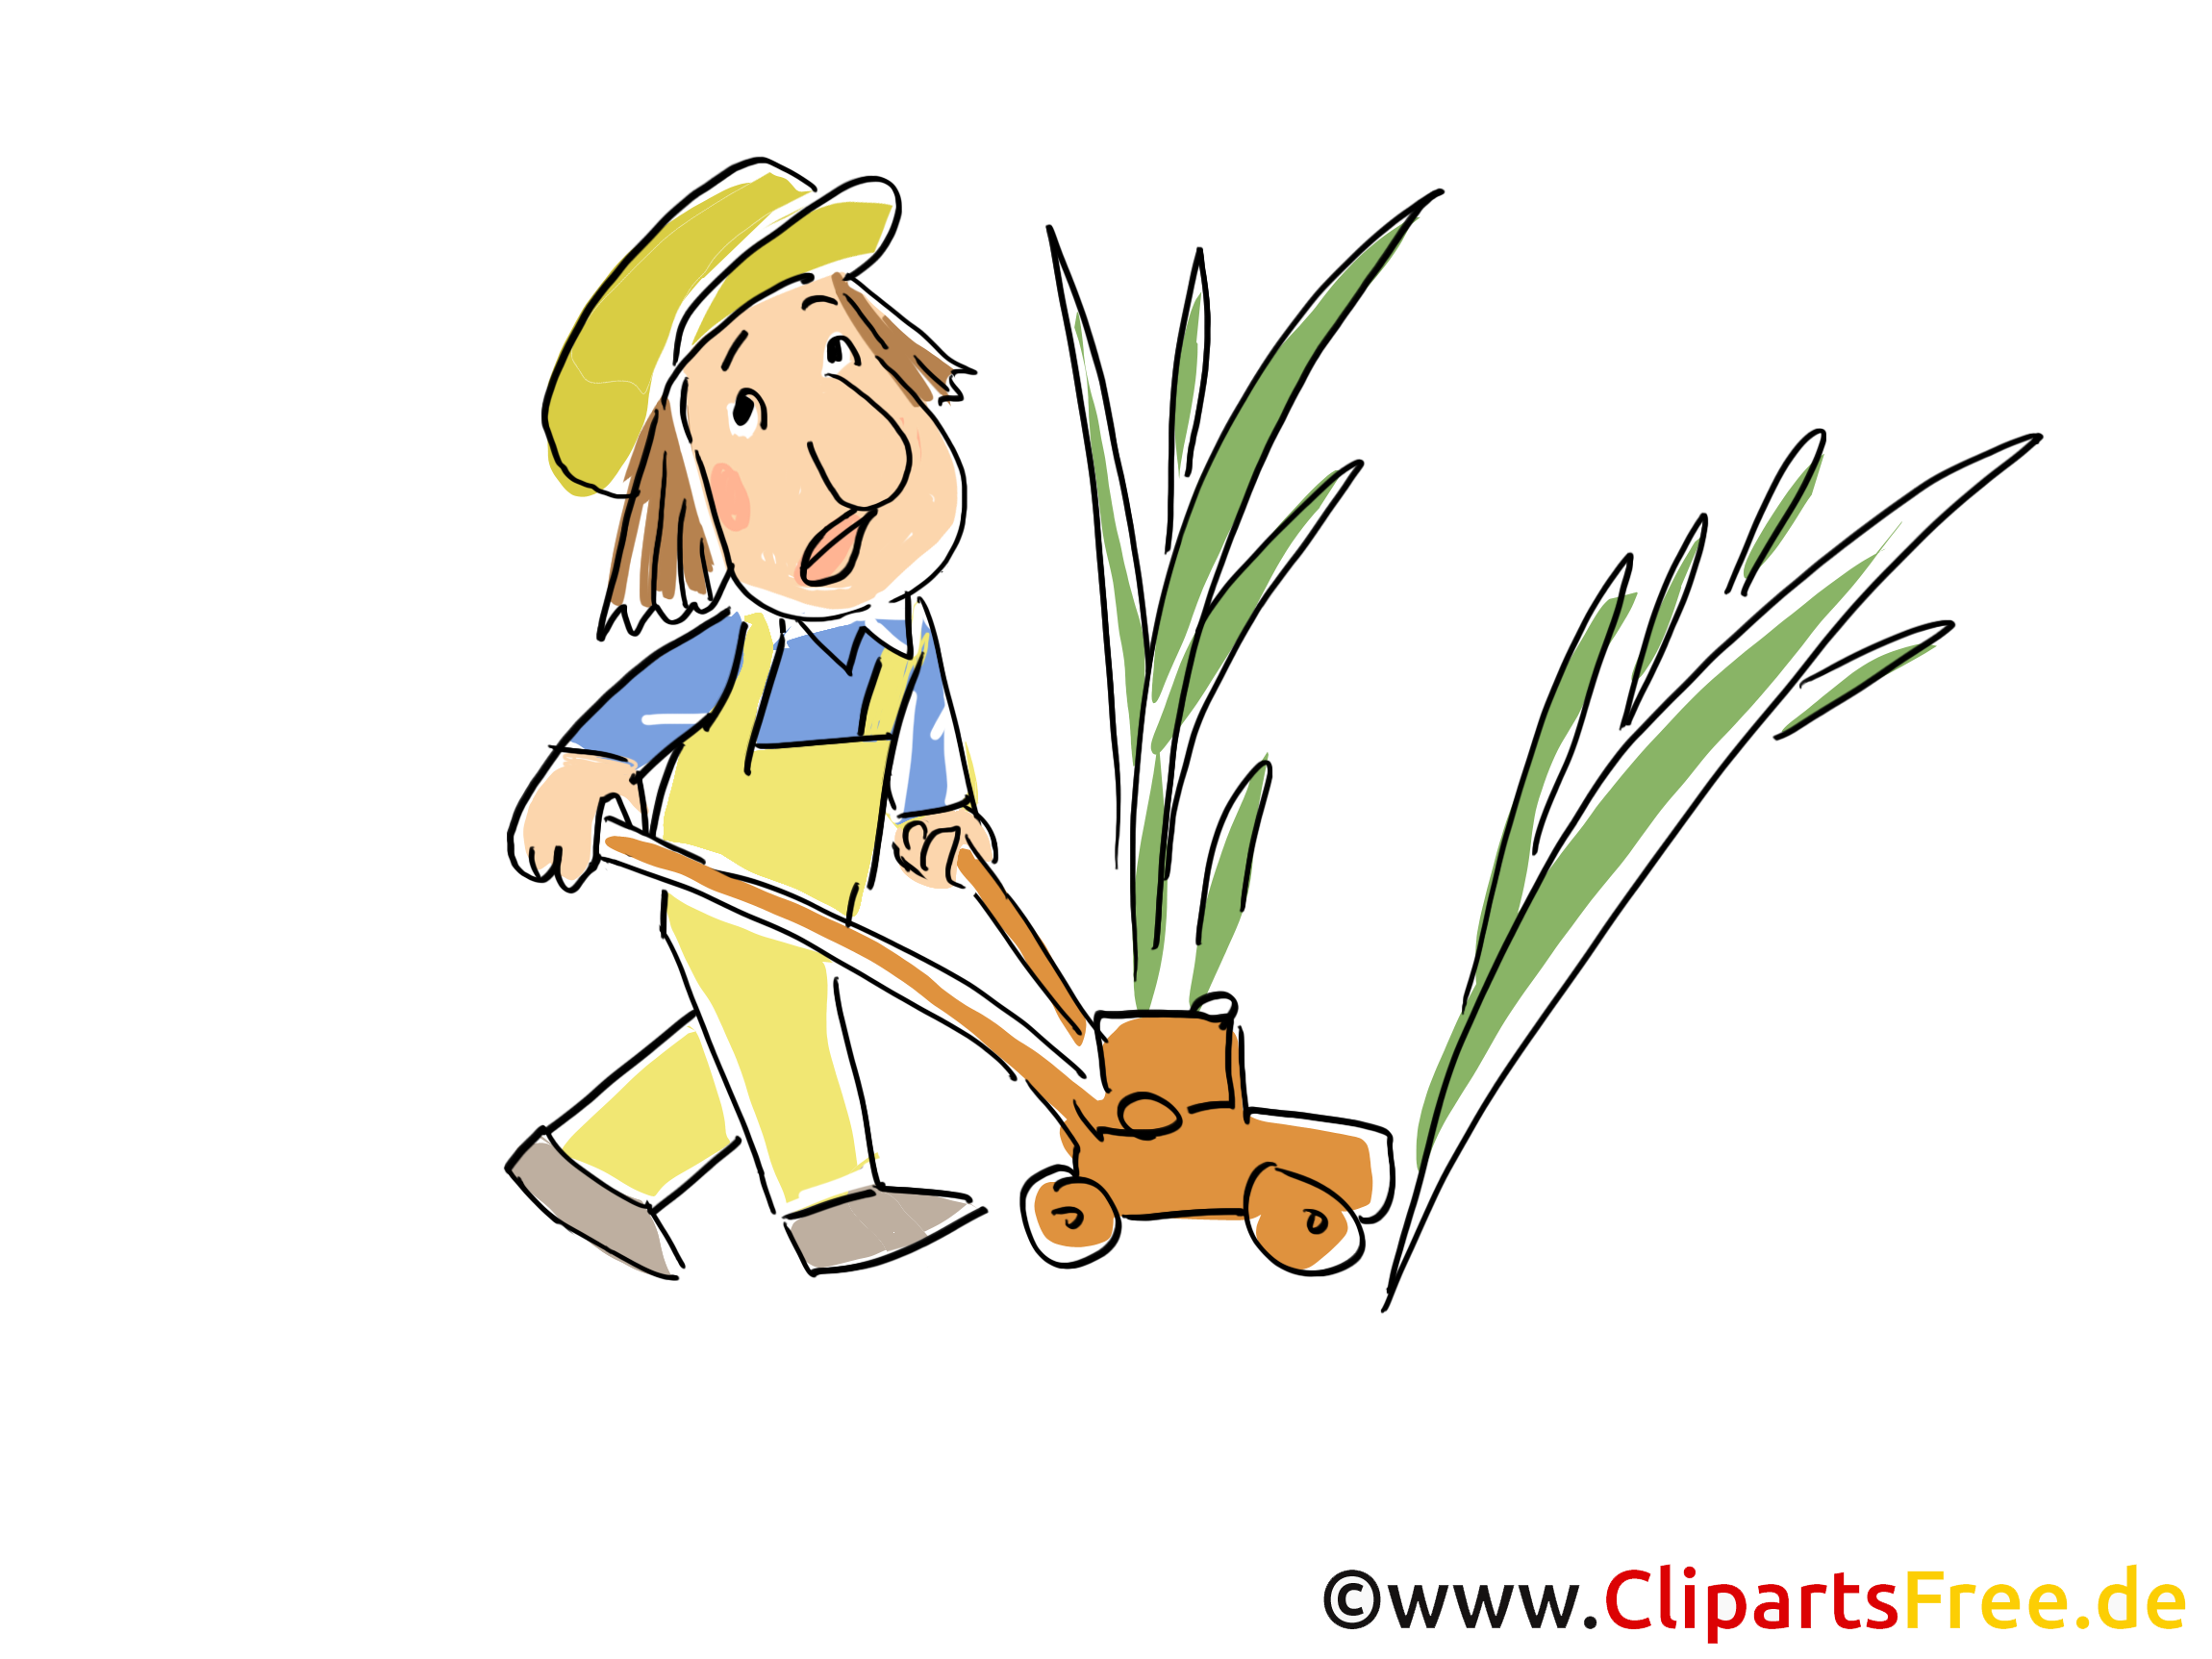 Gardener mows lawn cartoon clip art picture illustration. 